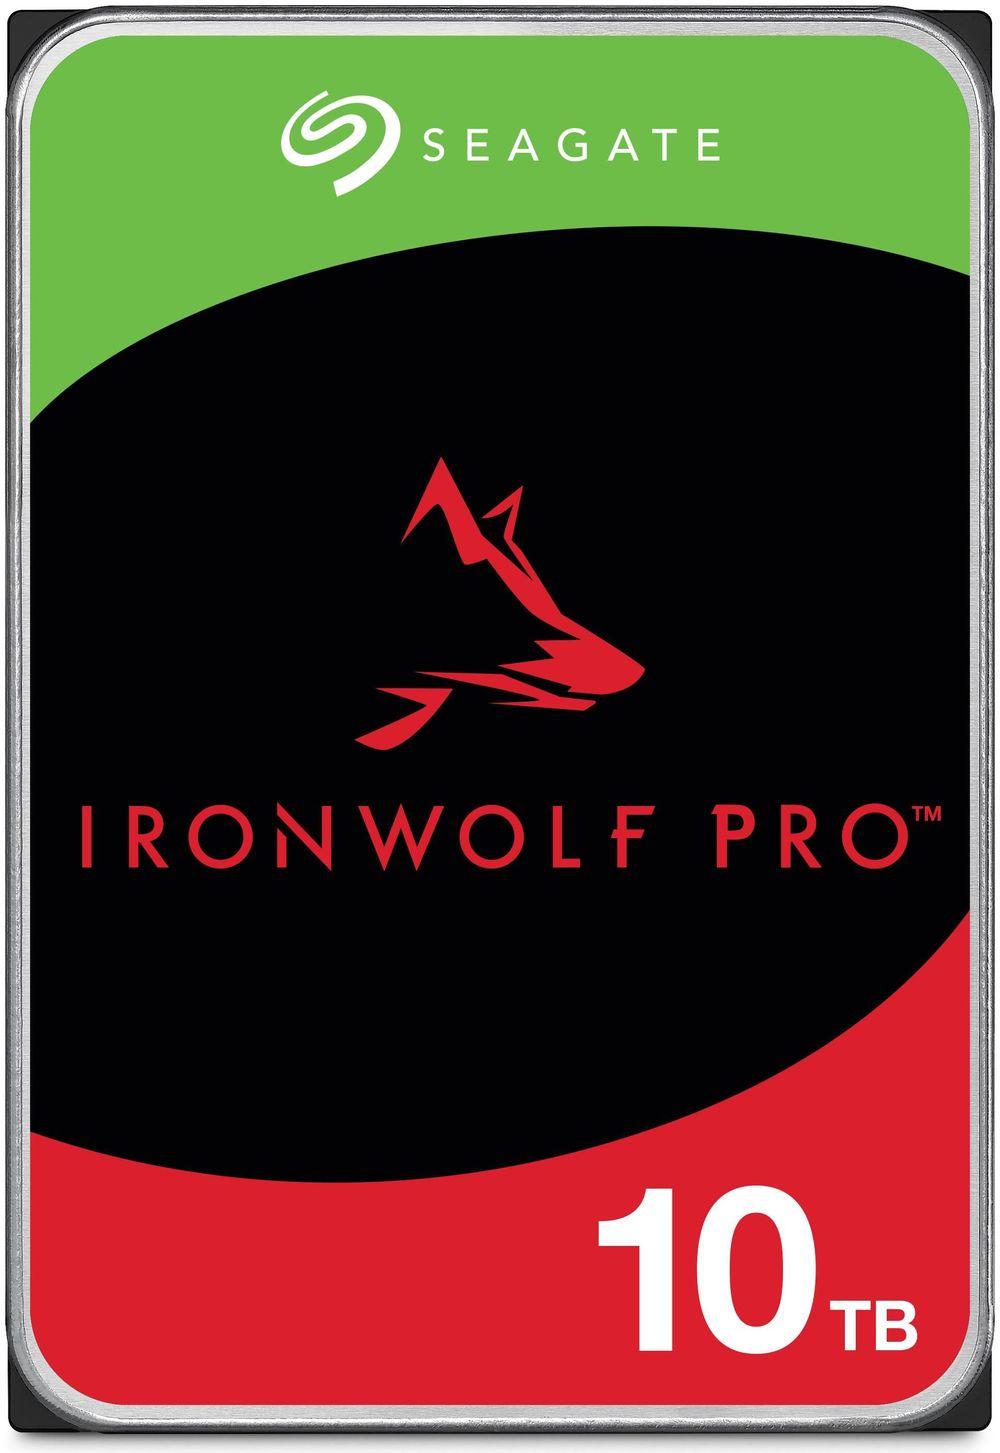   Seagate Ironwolf Pro ST10000NT001,  10,  HDD,  SATA III,  3.5